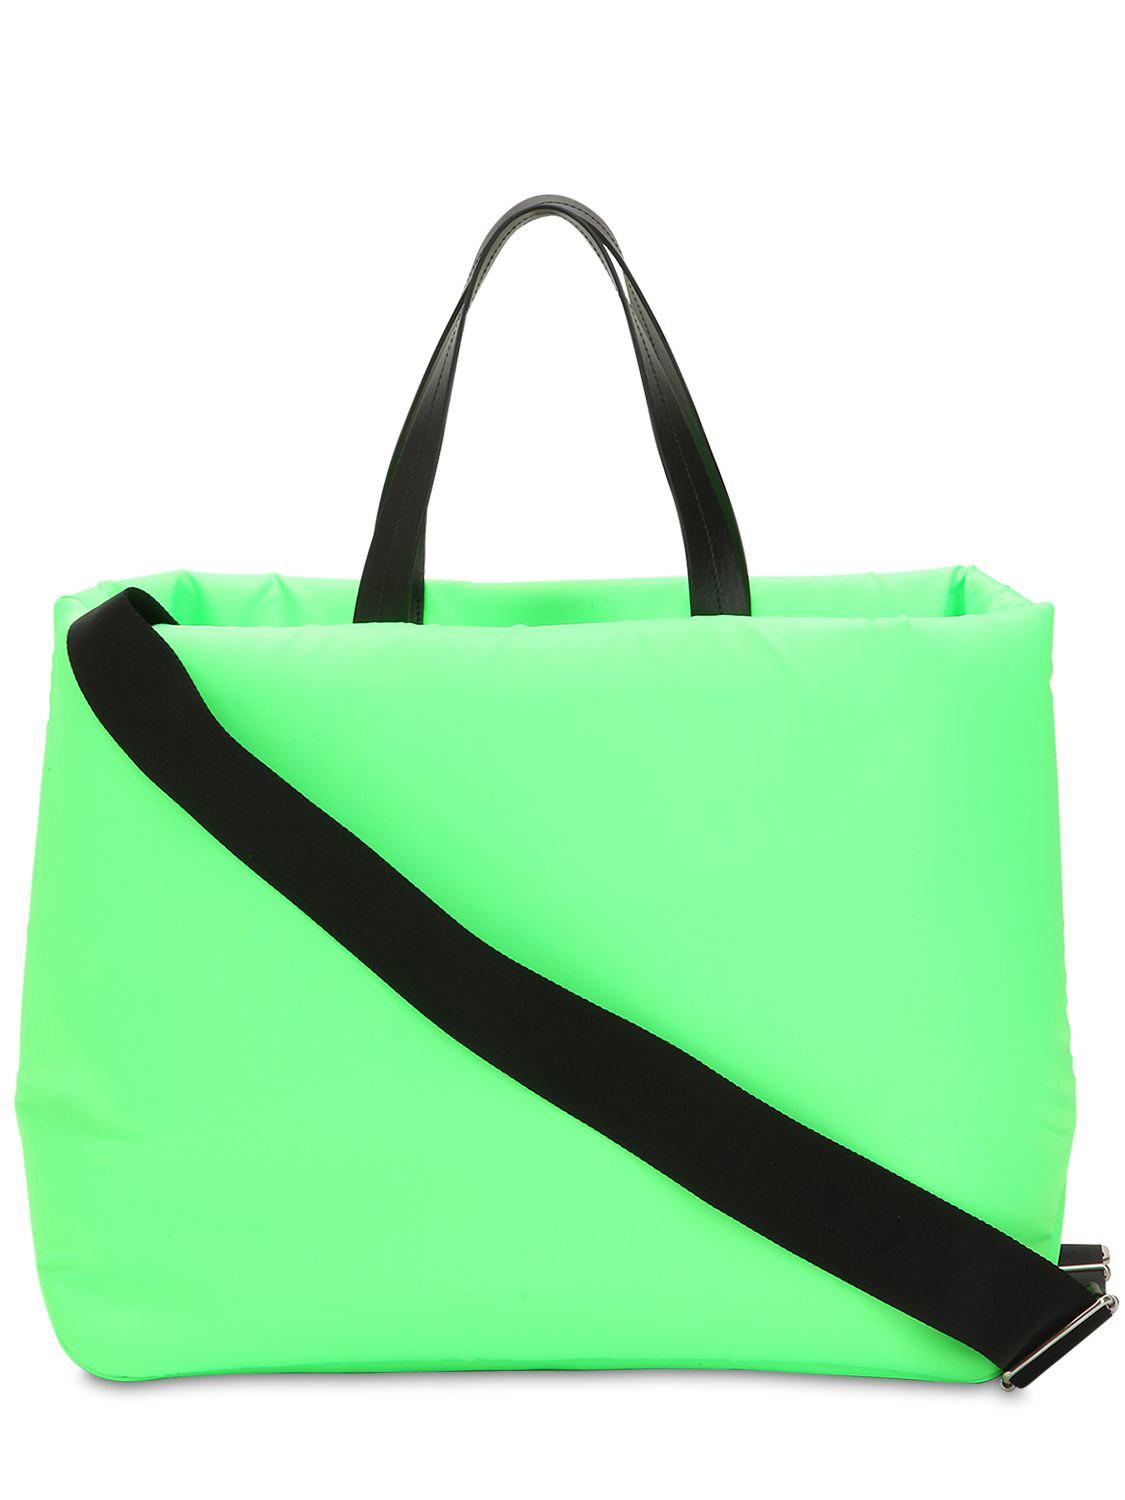 Prada Synthetic Puffer Nylon Tote Bag in Neon Green (Green) - Lyst